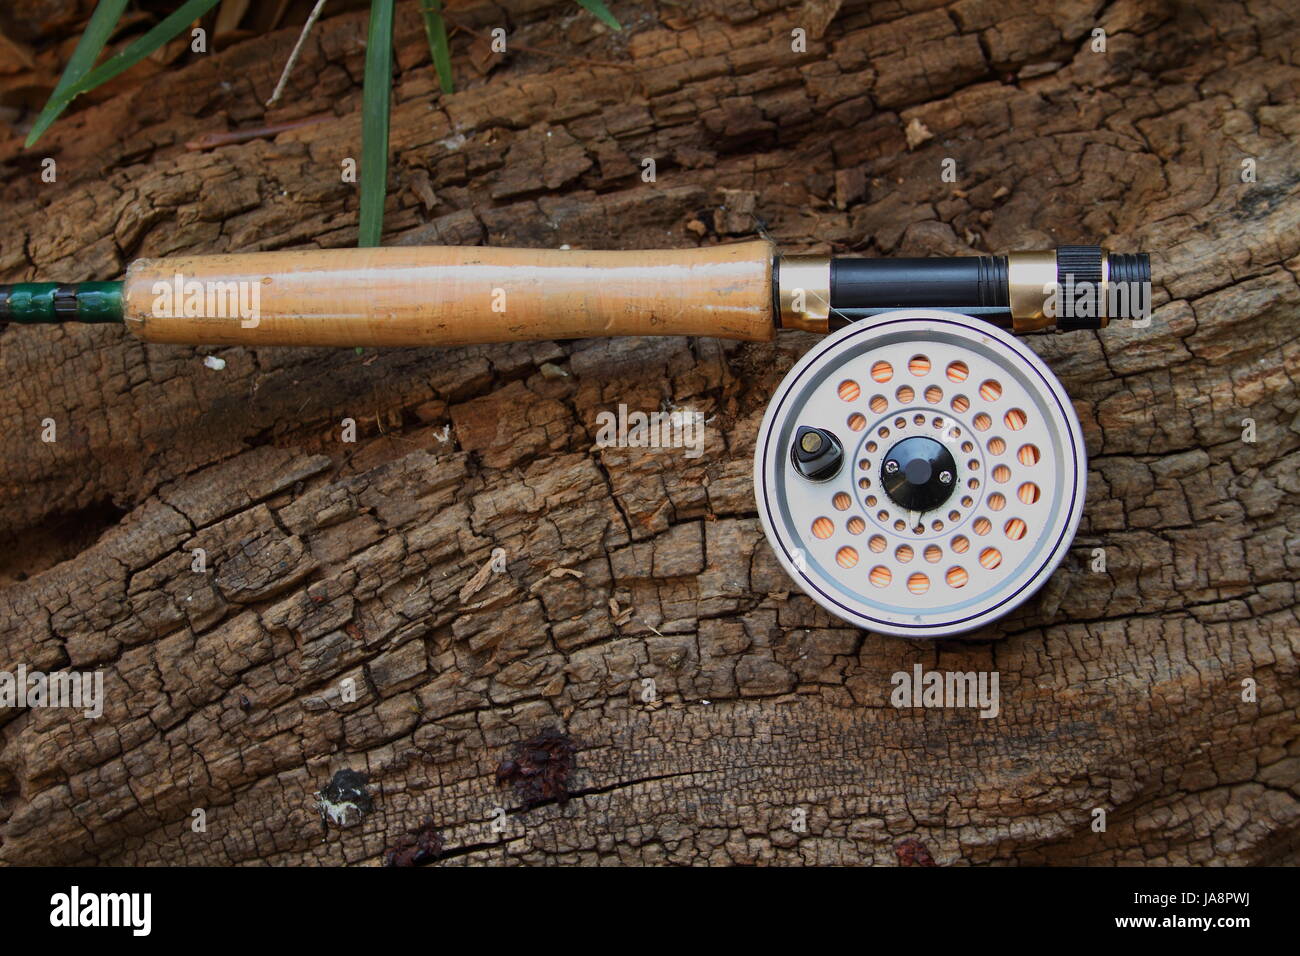 https://c8.alamy.com/comp/JA8PWJ/a-fly-fishing-rod-and-reel-on-a-log-in-the-outdoors-JA8PWJ.jpg